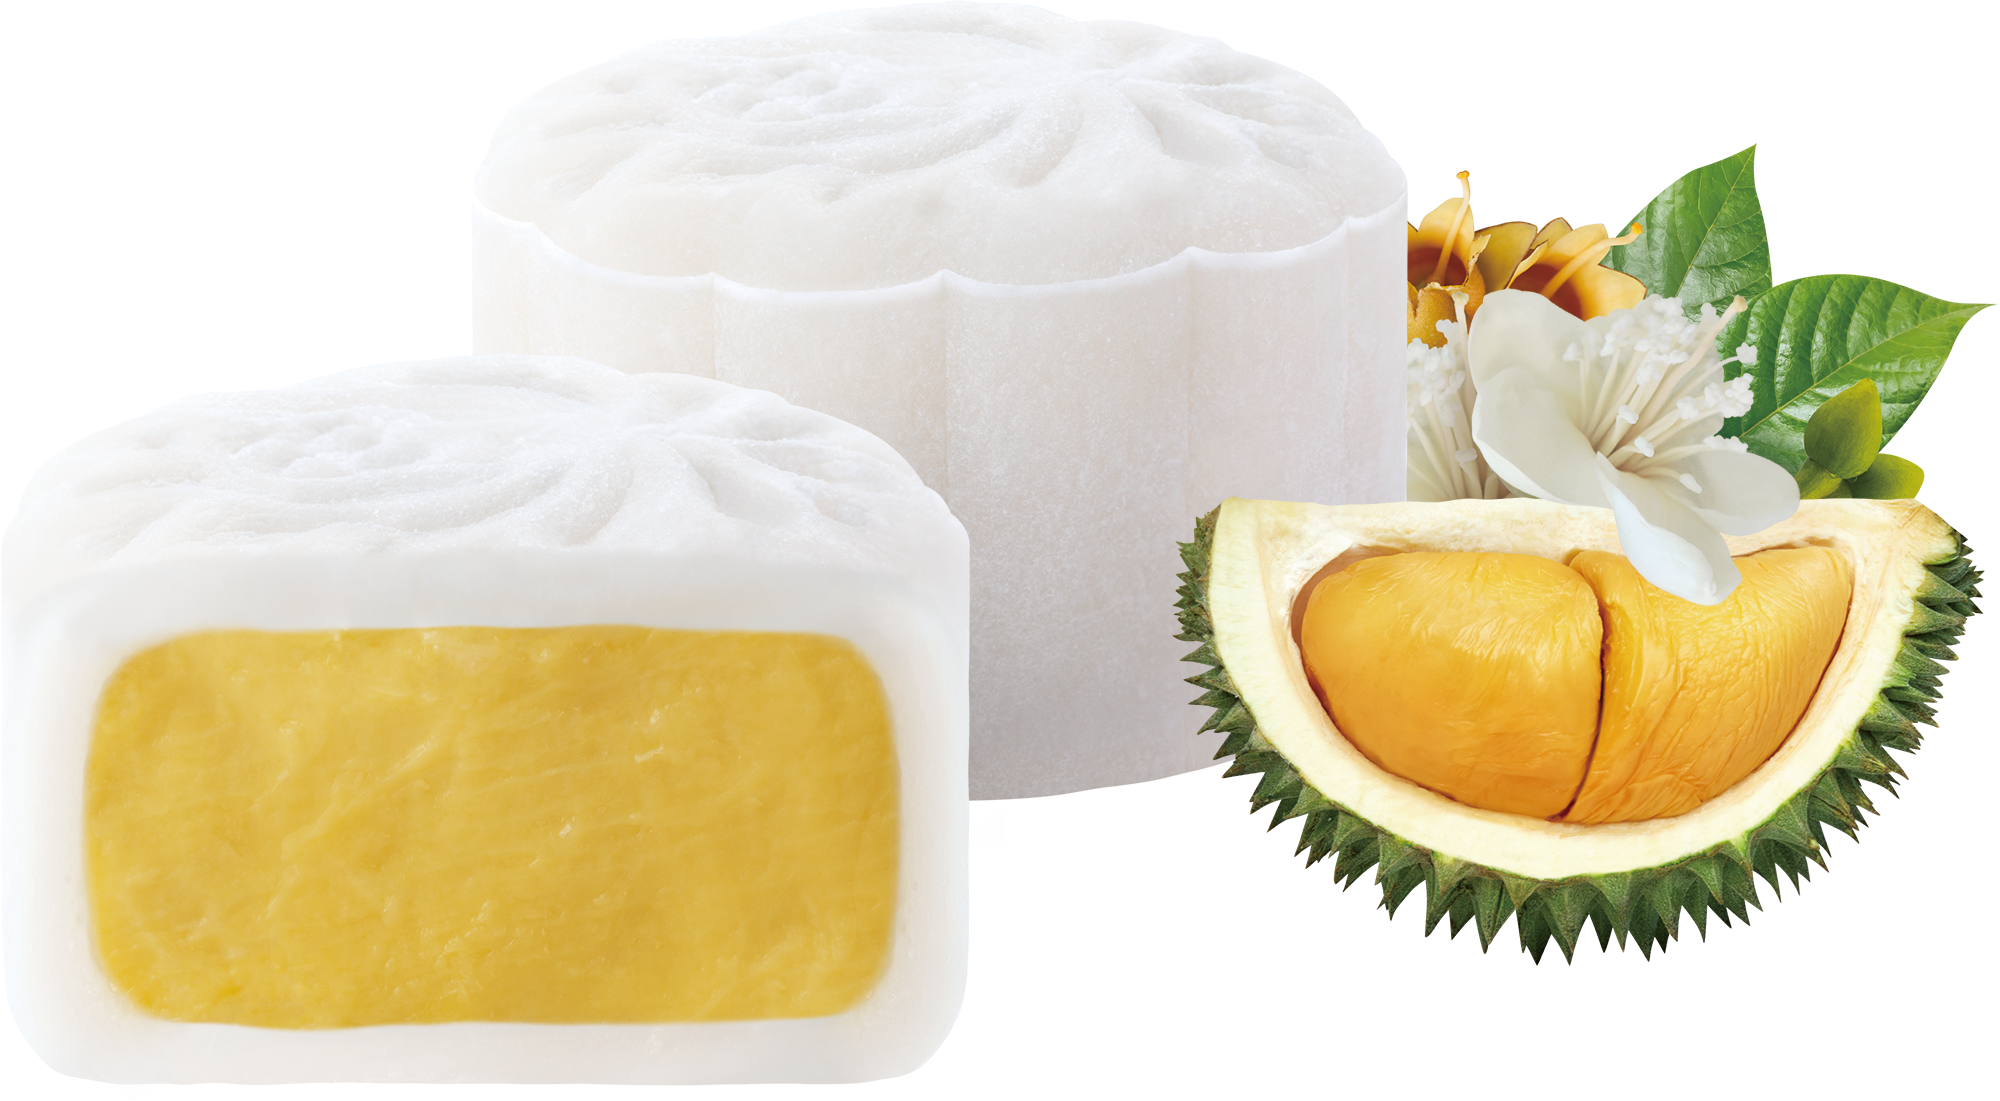 Emperor's Love - Premium Musang King Durian Ice Cream